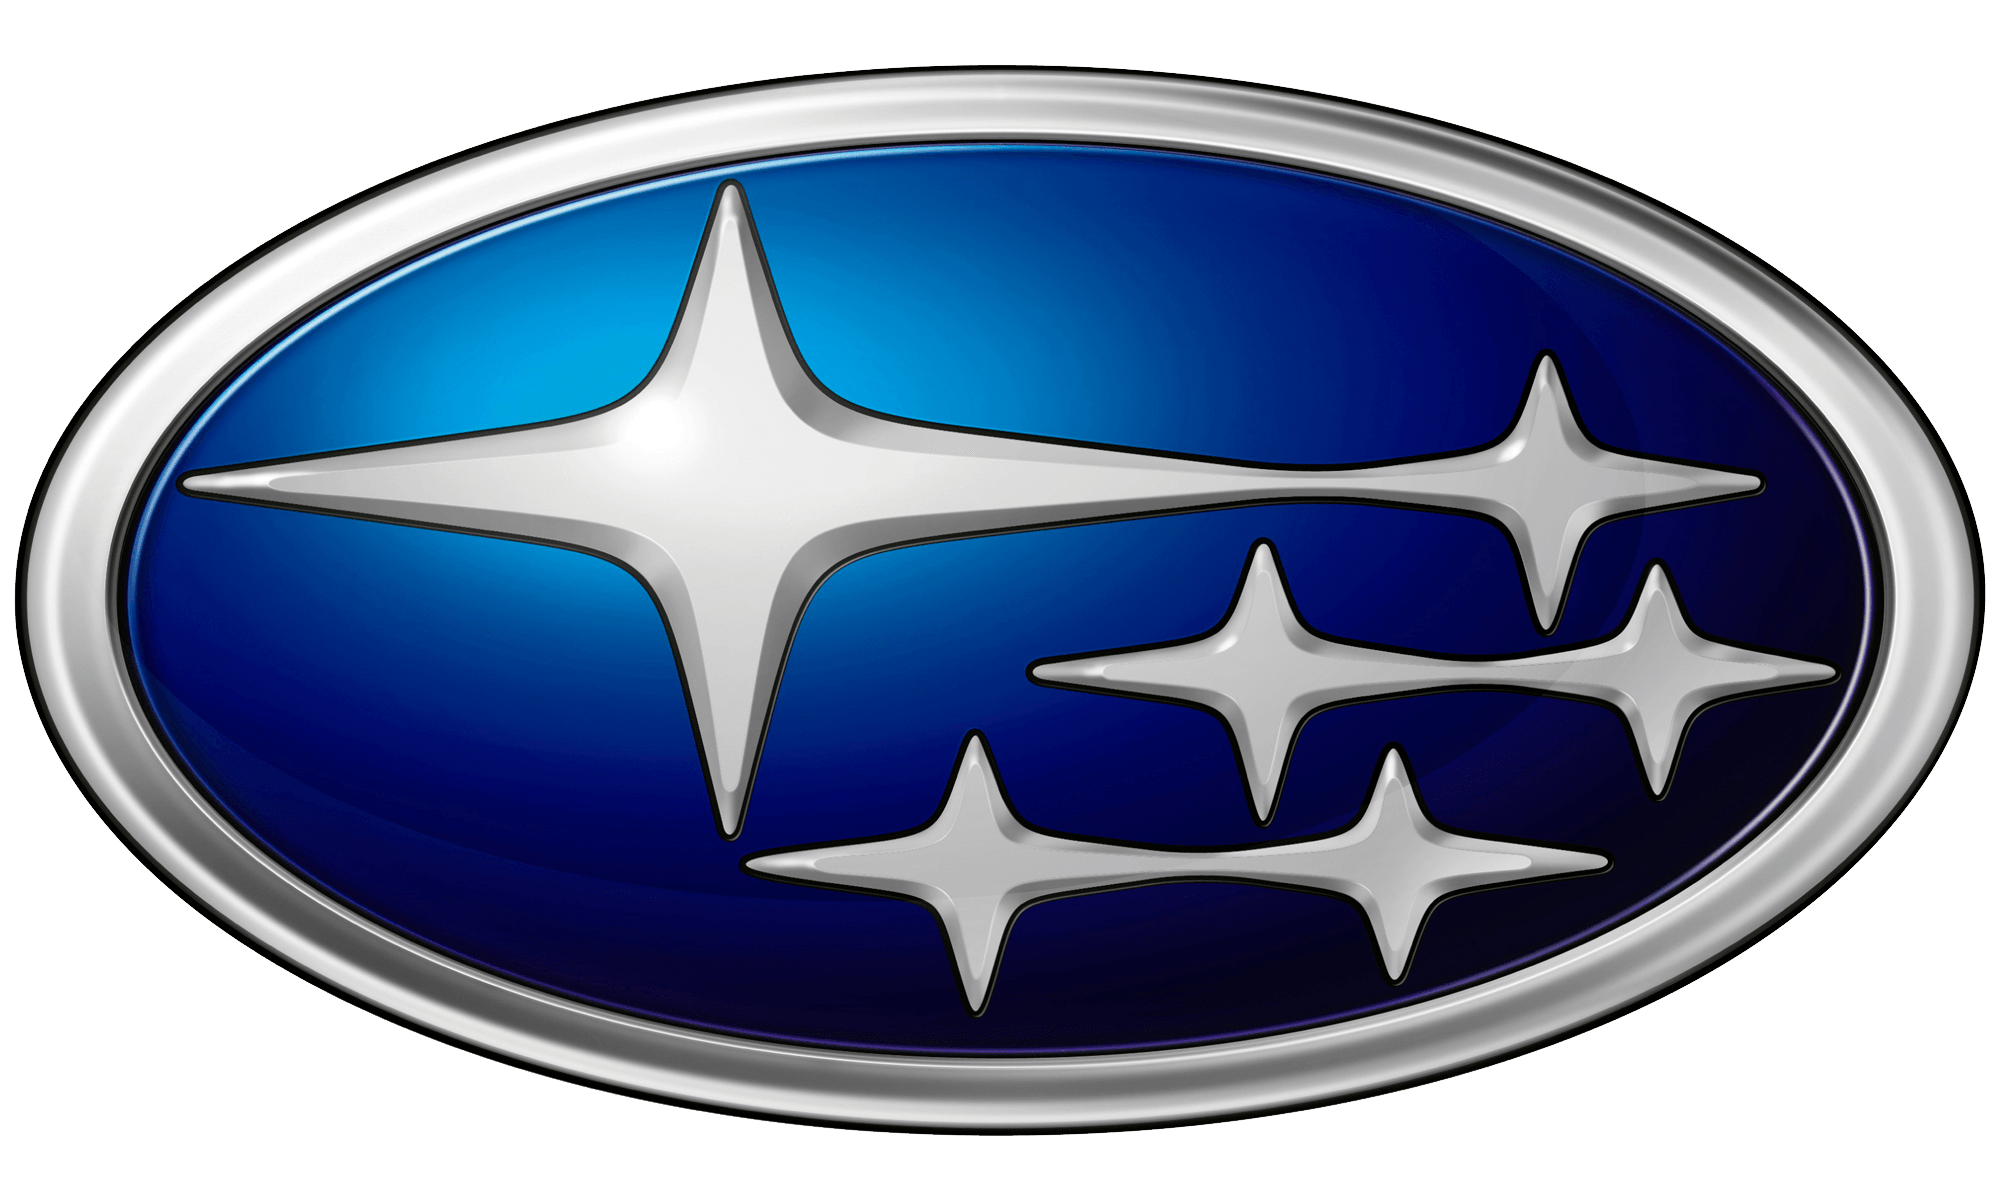 Subaru Logo, Subaru Impreza W